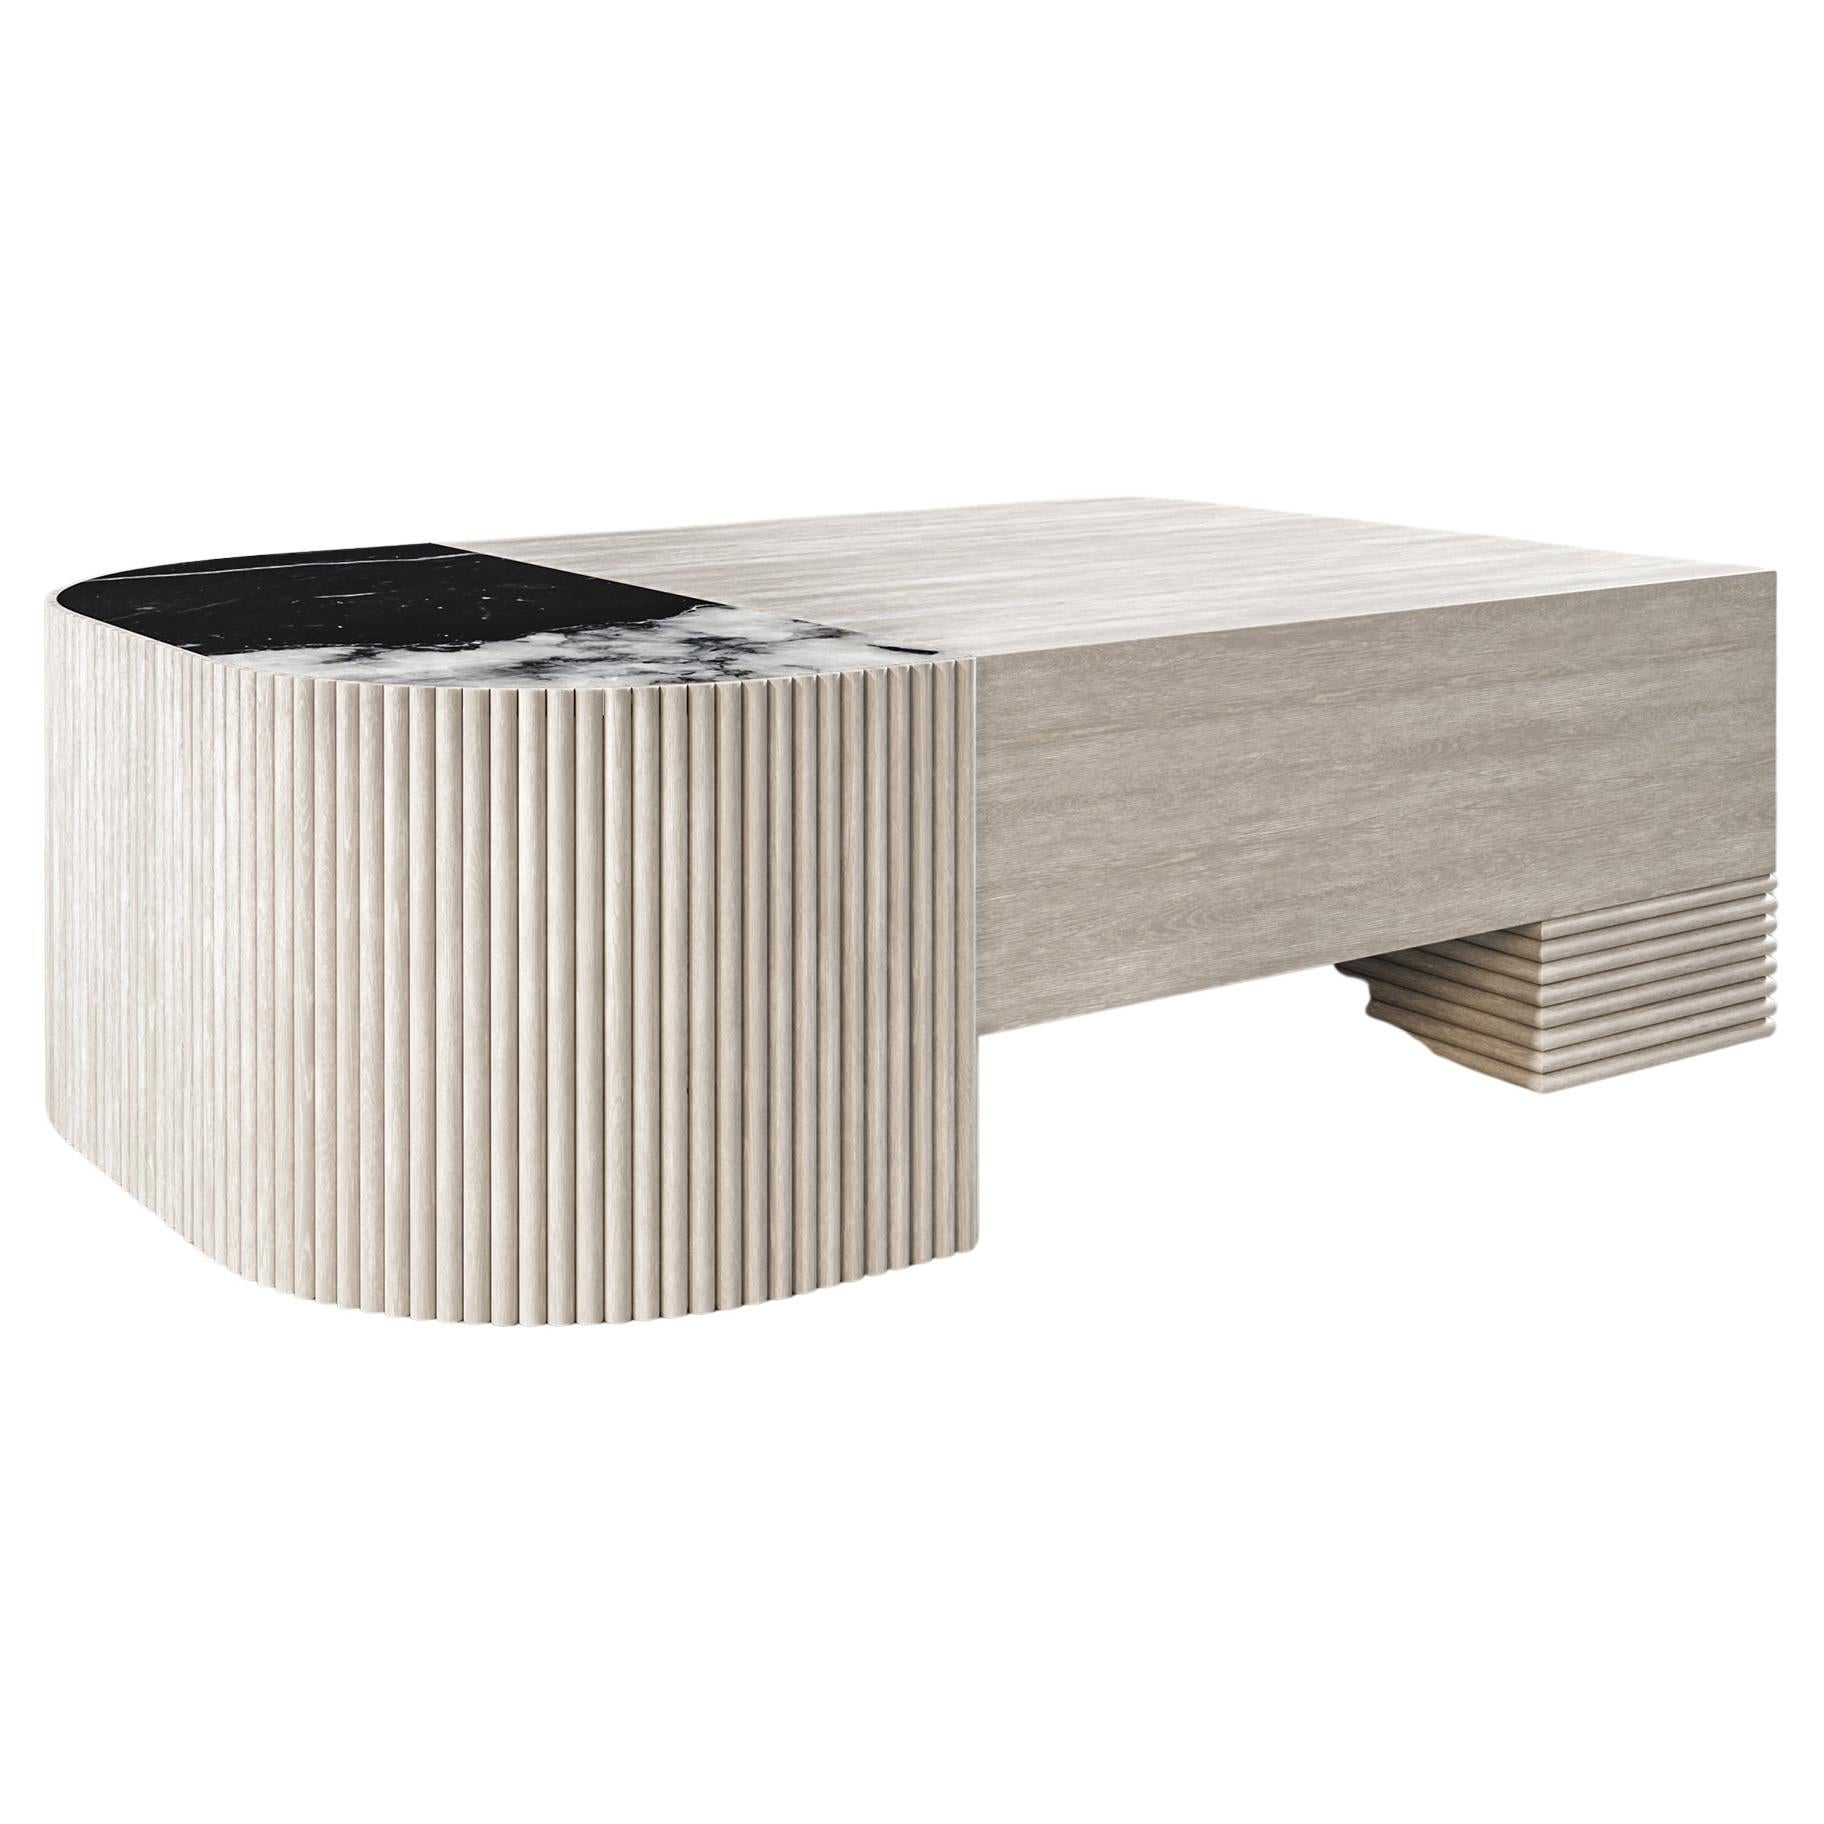 SWAY COFFEE TABLE – modernes Design mit sandfarbener Eiche + Nero Marquina Marmor im Angebot